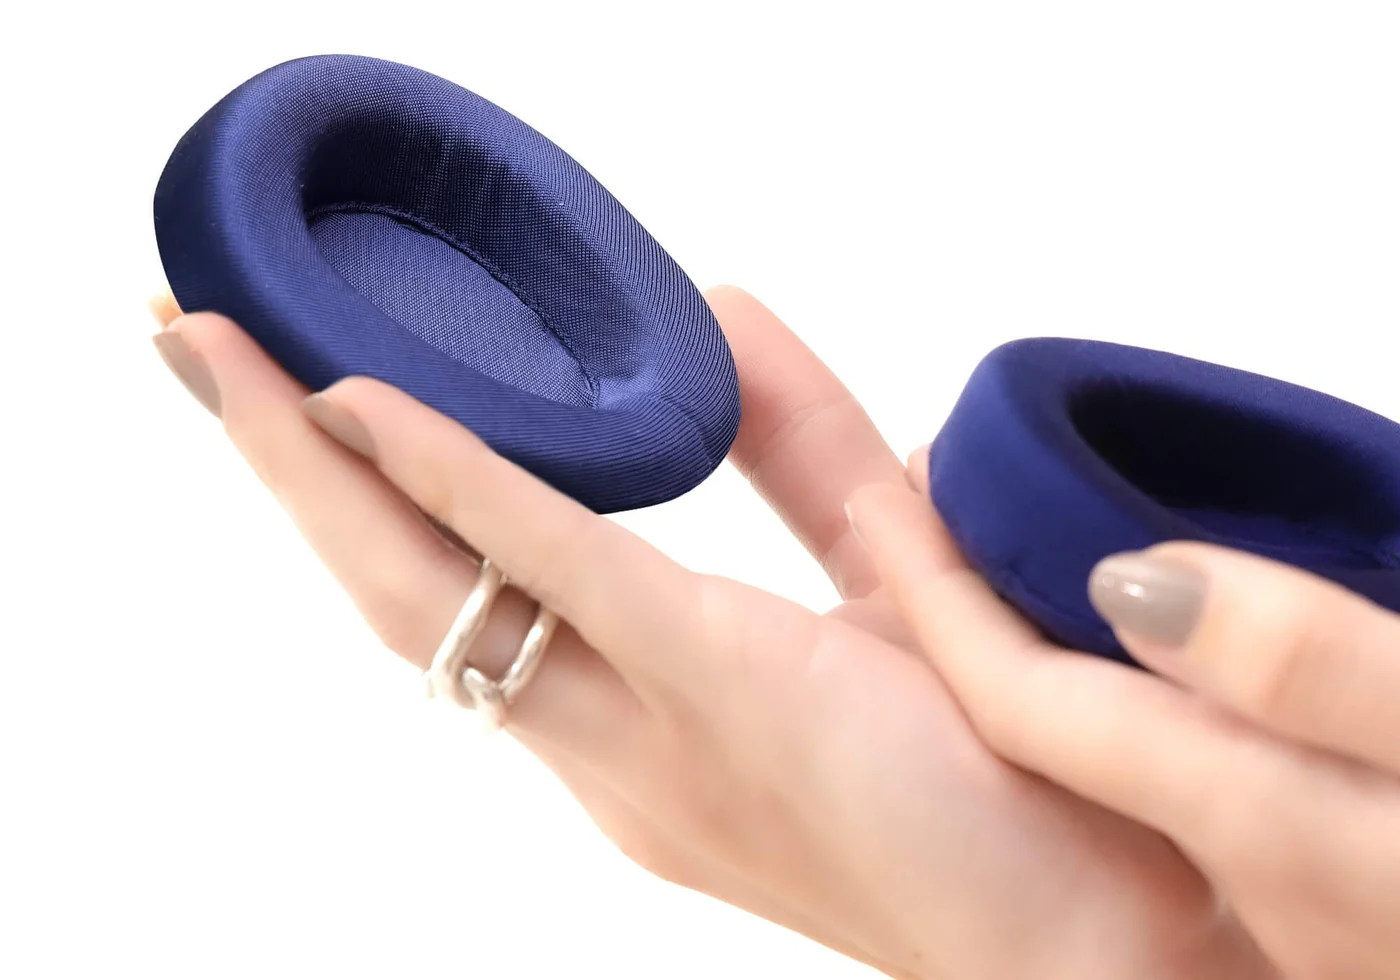 Hands holding 2 blue convex eye cups of a silk sleep mask.